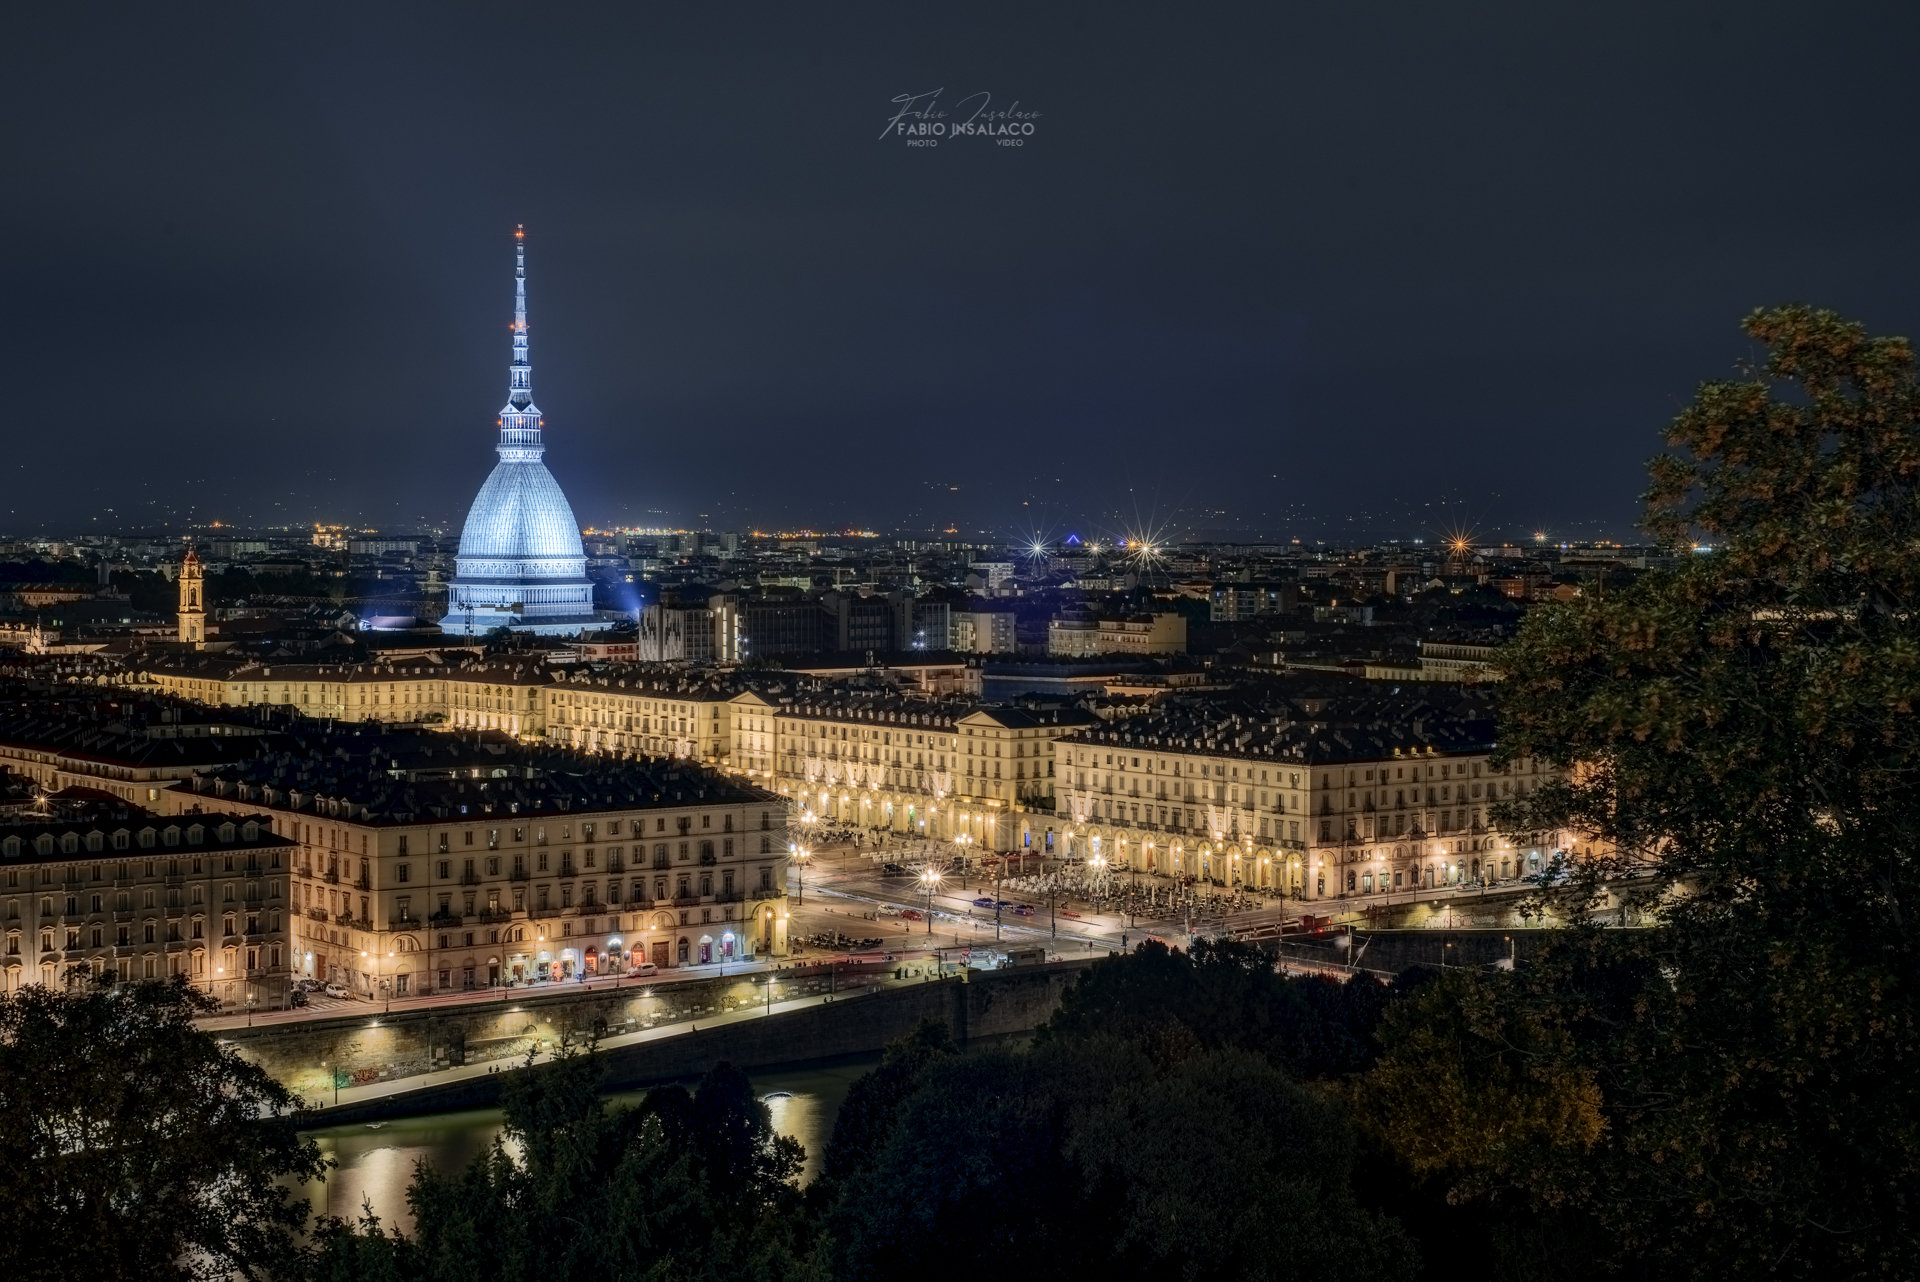 Torino by night...